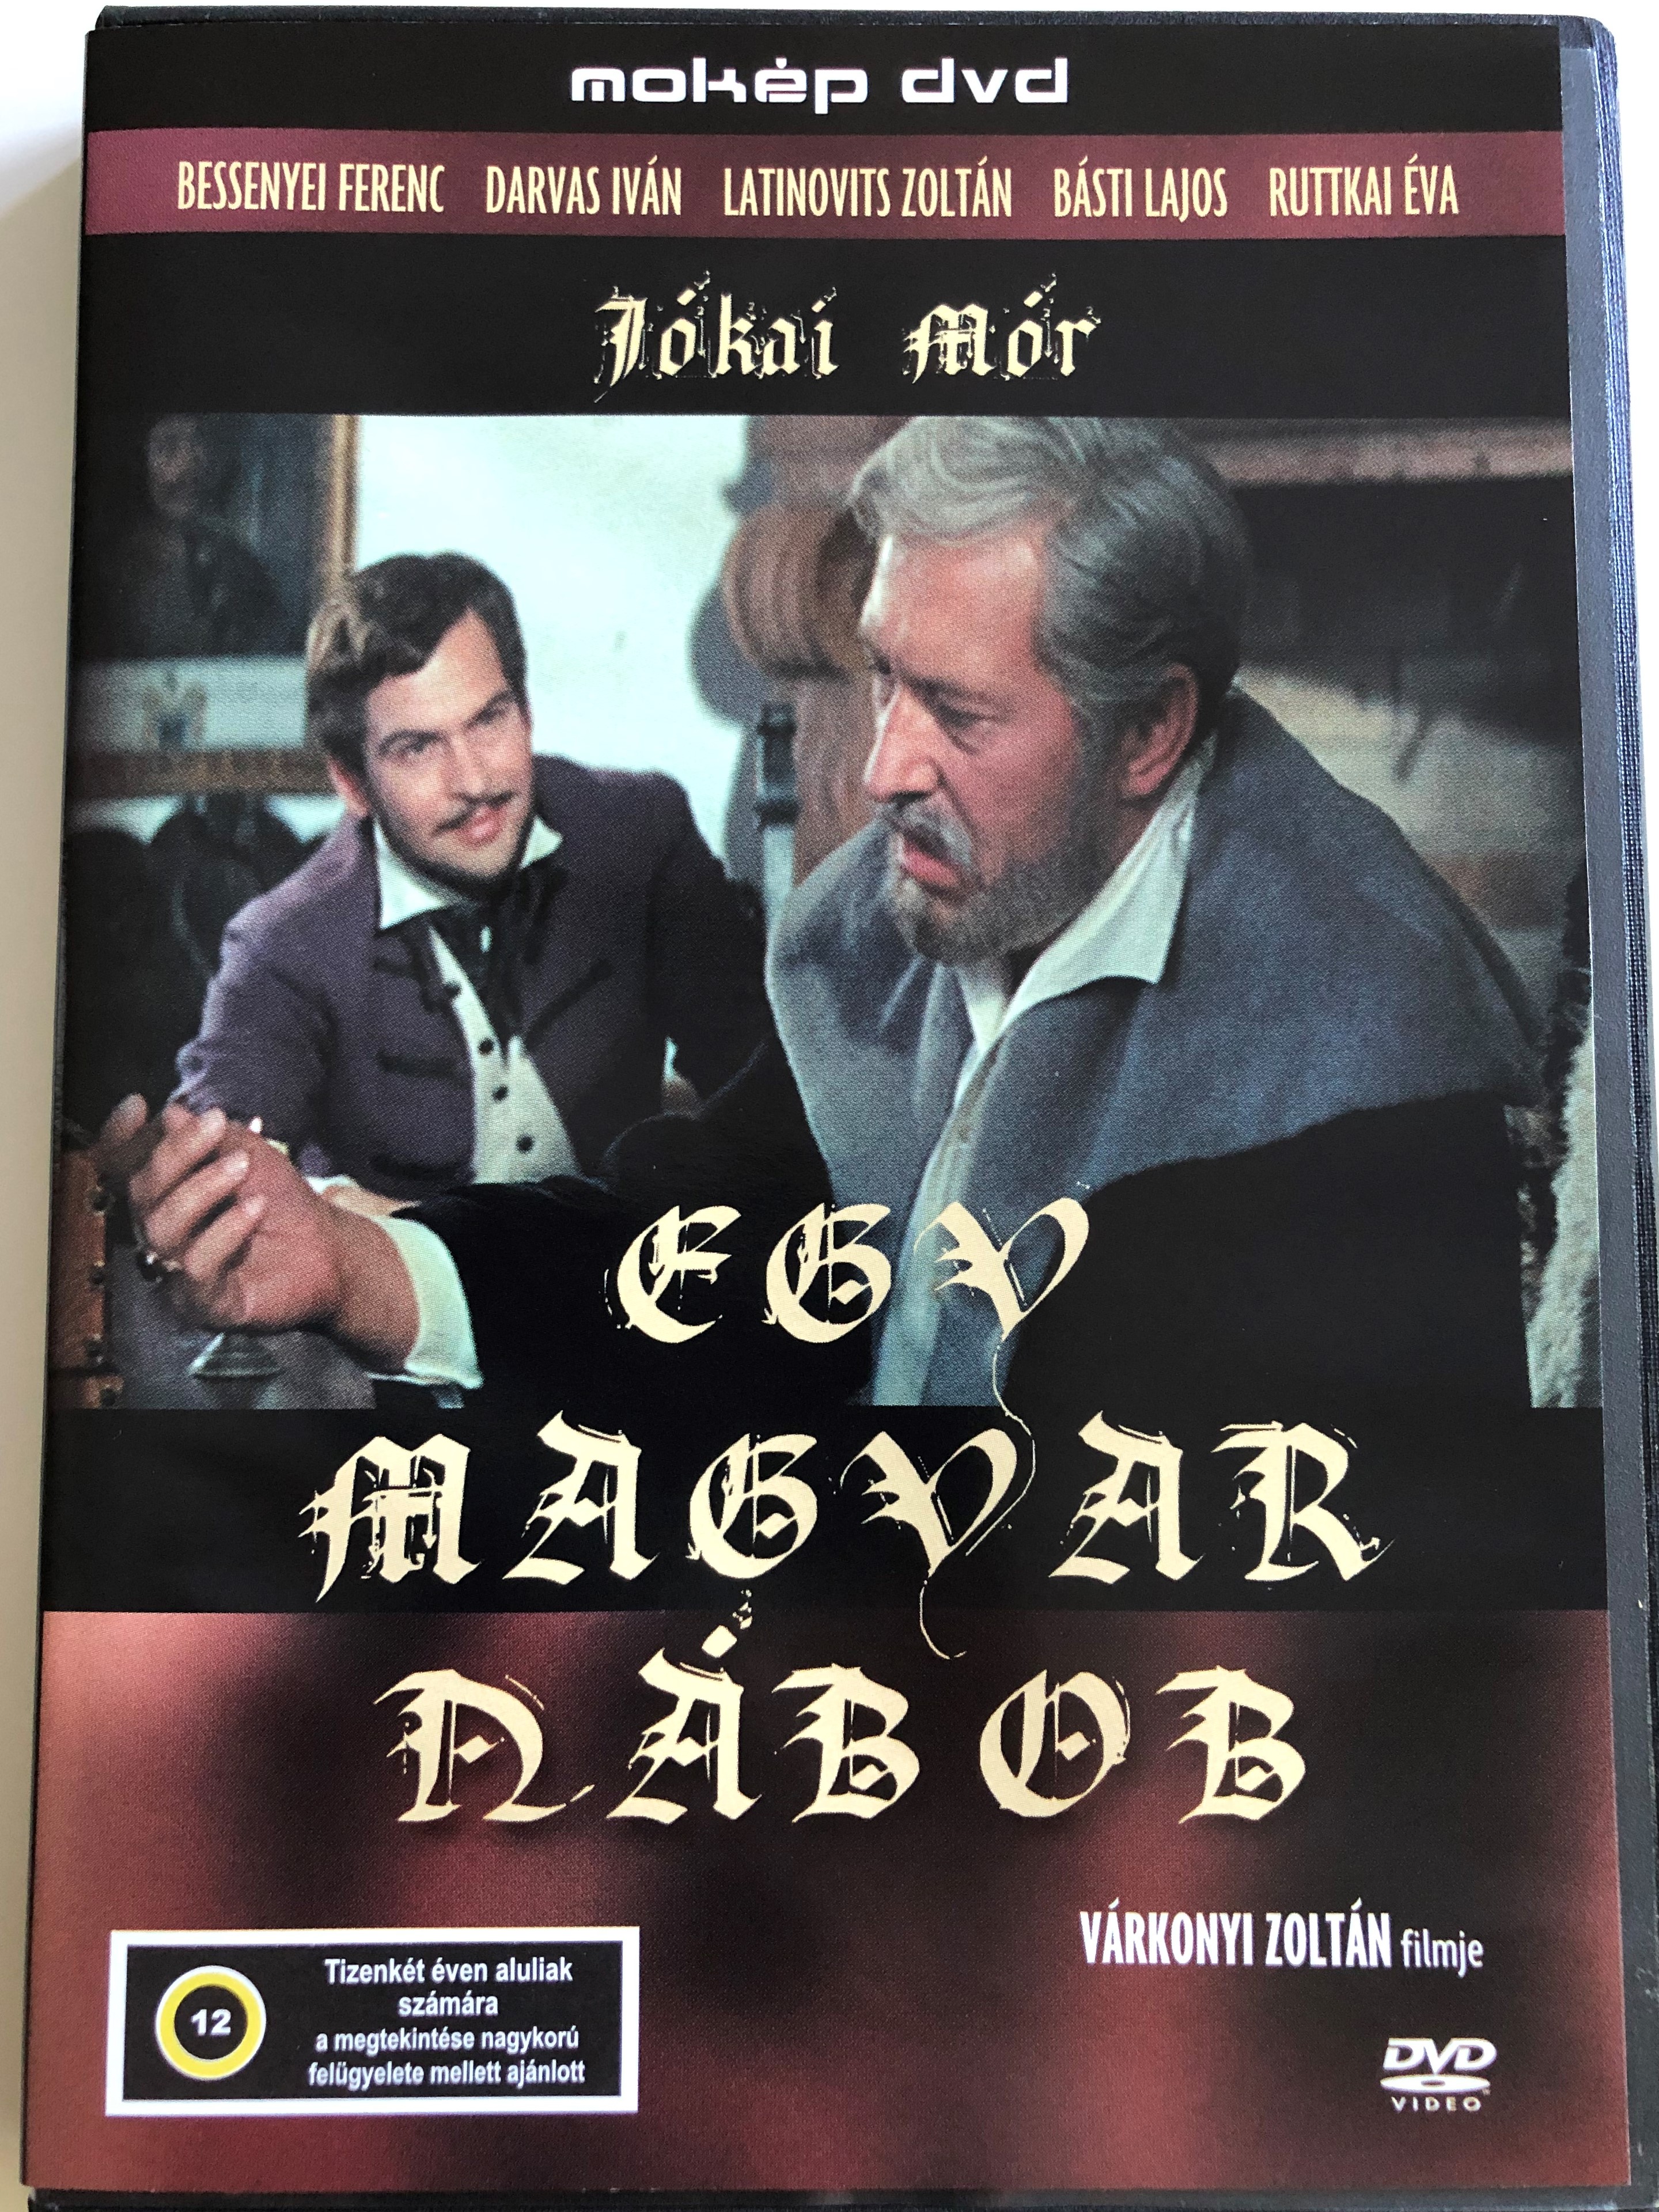 -egy-magyar-n-bob-dvd-1966-directed-by-v-rkonyi-zolt-n-starring-bessenyei-ferenc-darvas-iv-n-latinovits-zolt-n-b-sti-lajos-ruttkai-va-j-kai-m-r-reg-nye-alapj-n-1-.jpg